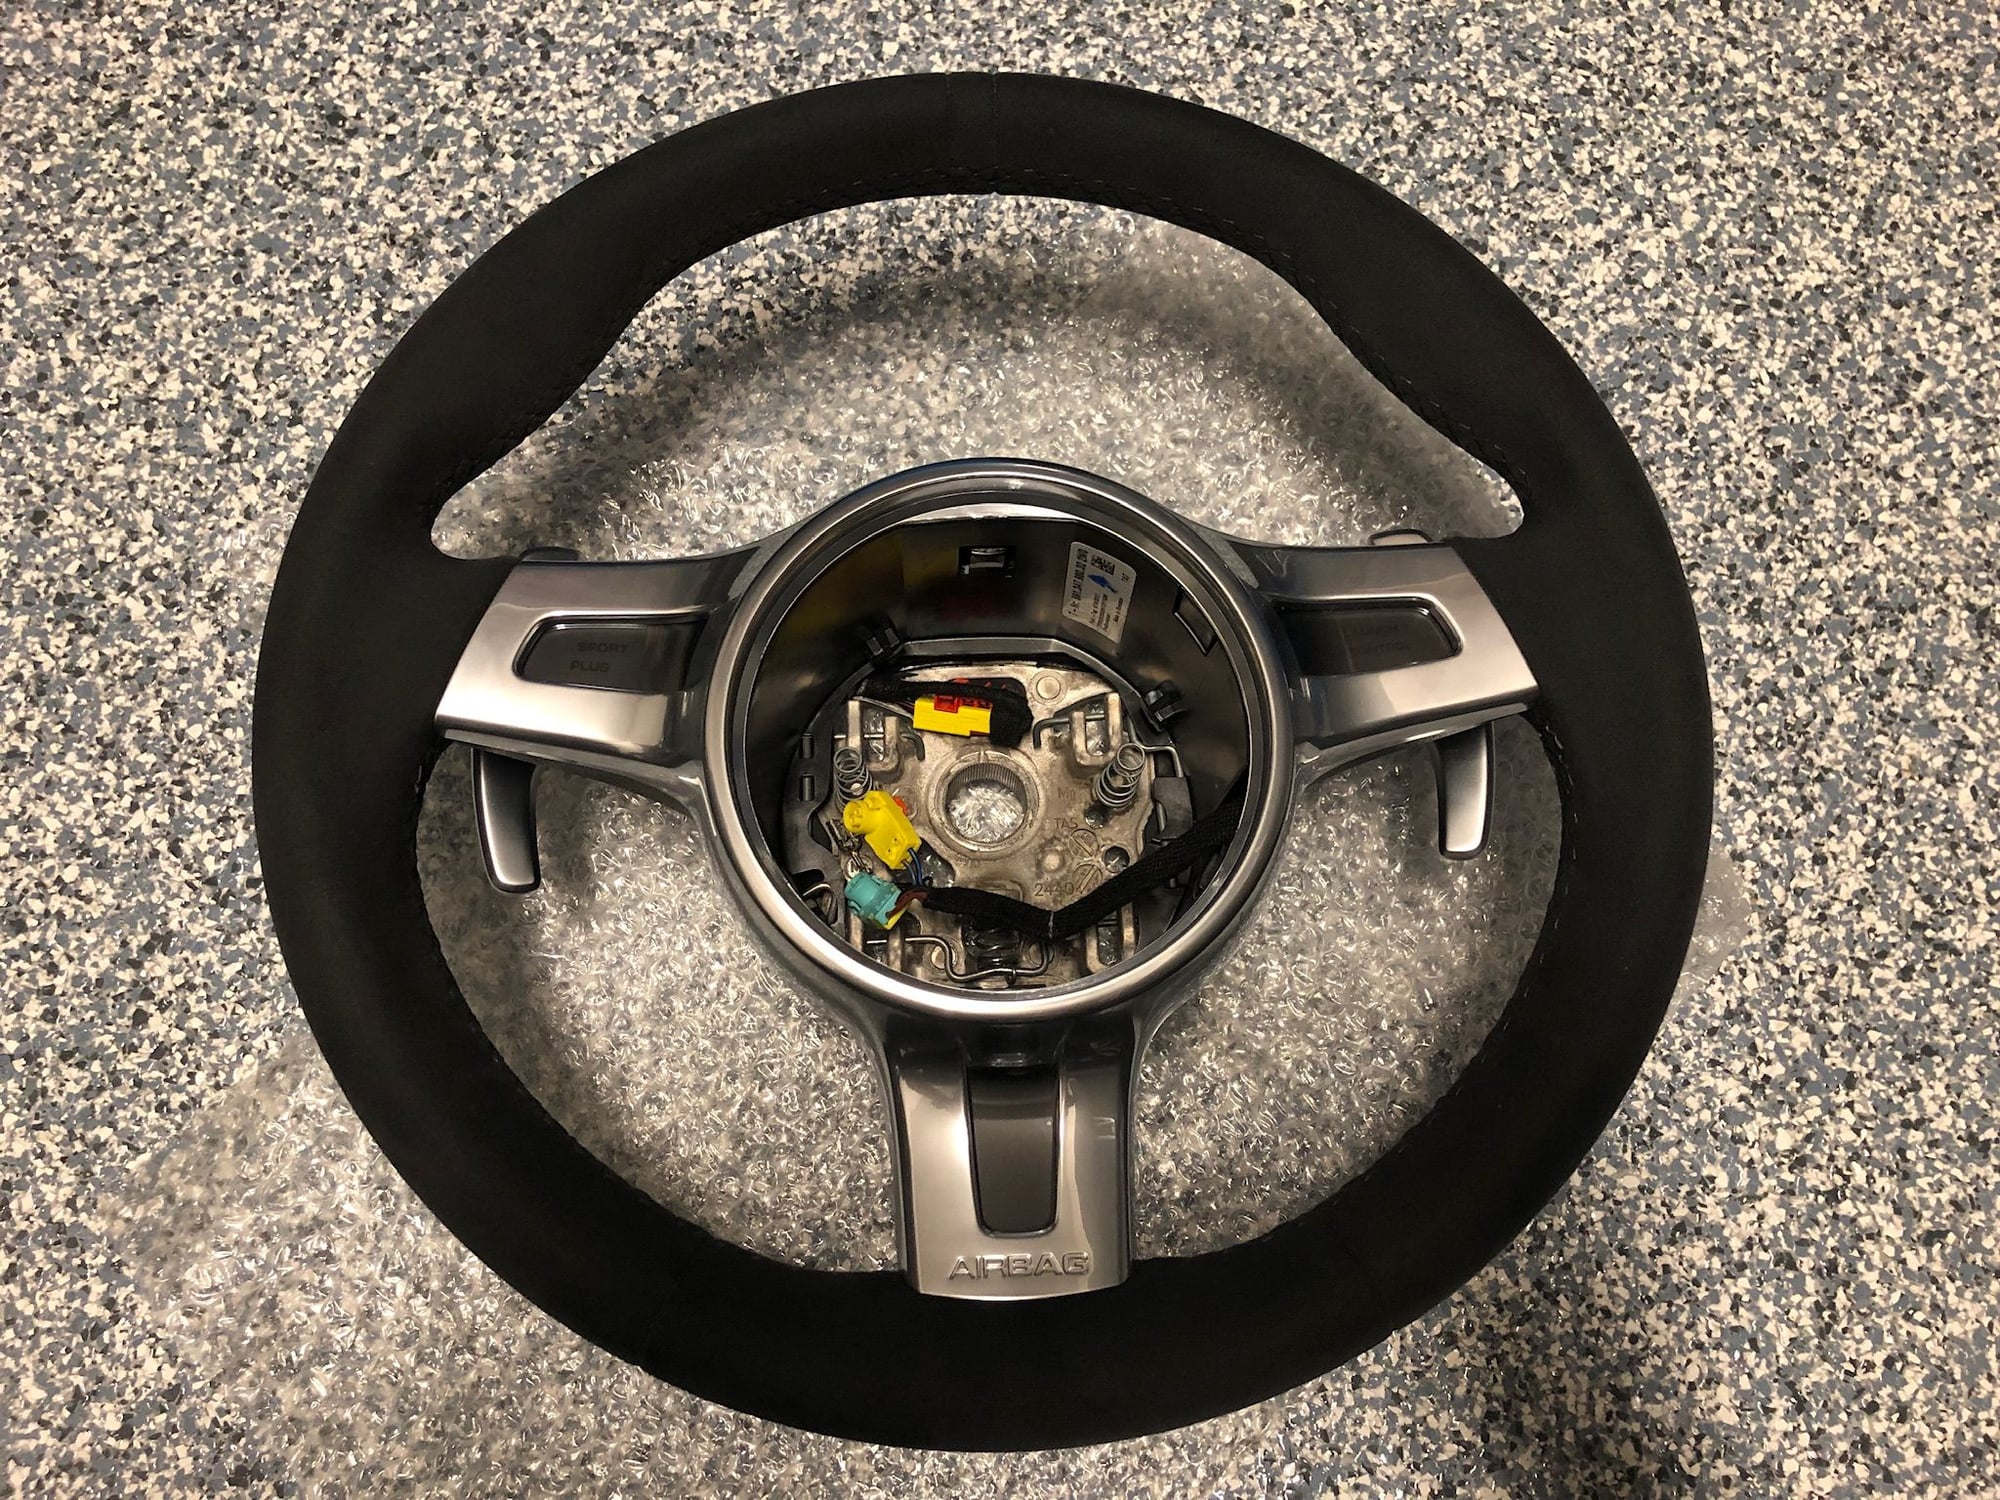 Steering/Suspension - FS: * Mint Alcantara PDK Sport Design Steering Wheel 991 997.2 987.2 - Used - 2009 to 2017 Porsche 911 - Ladera Ranch, CA 92694, United States